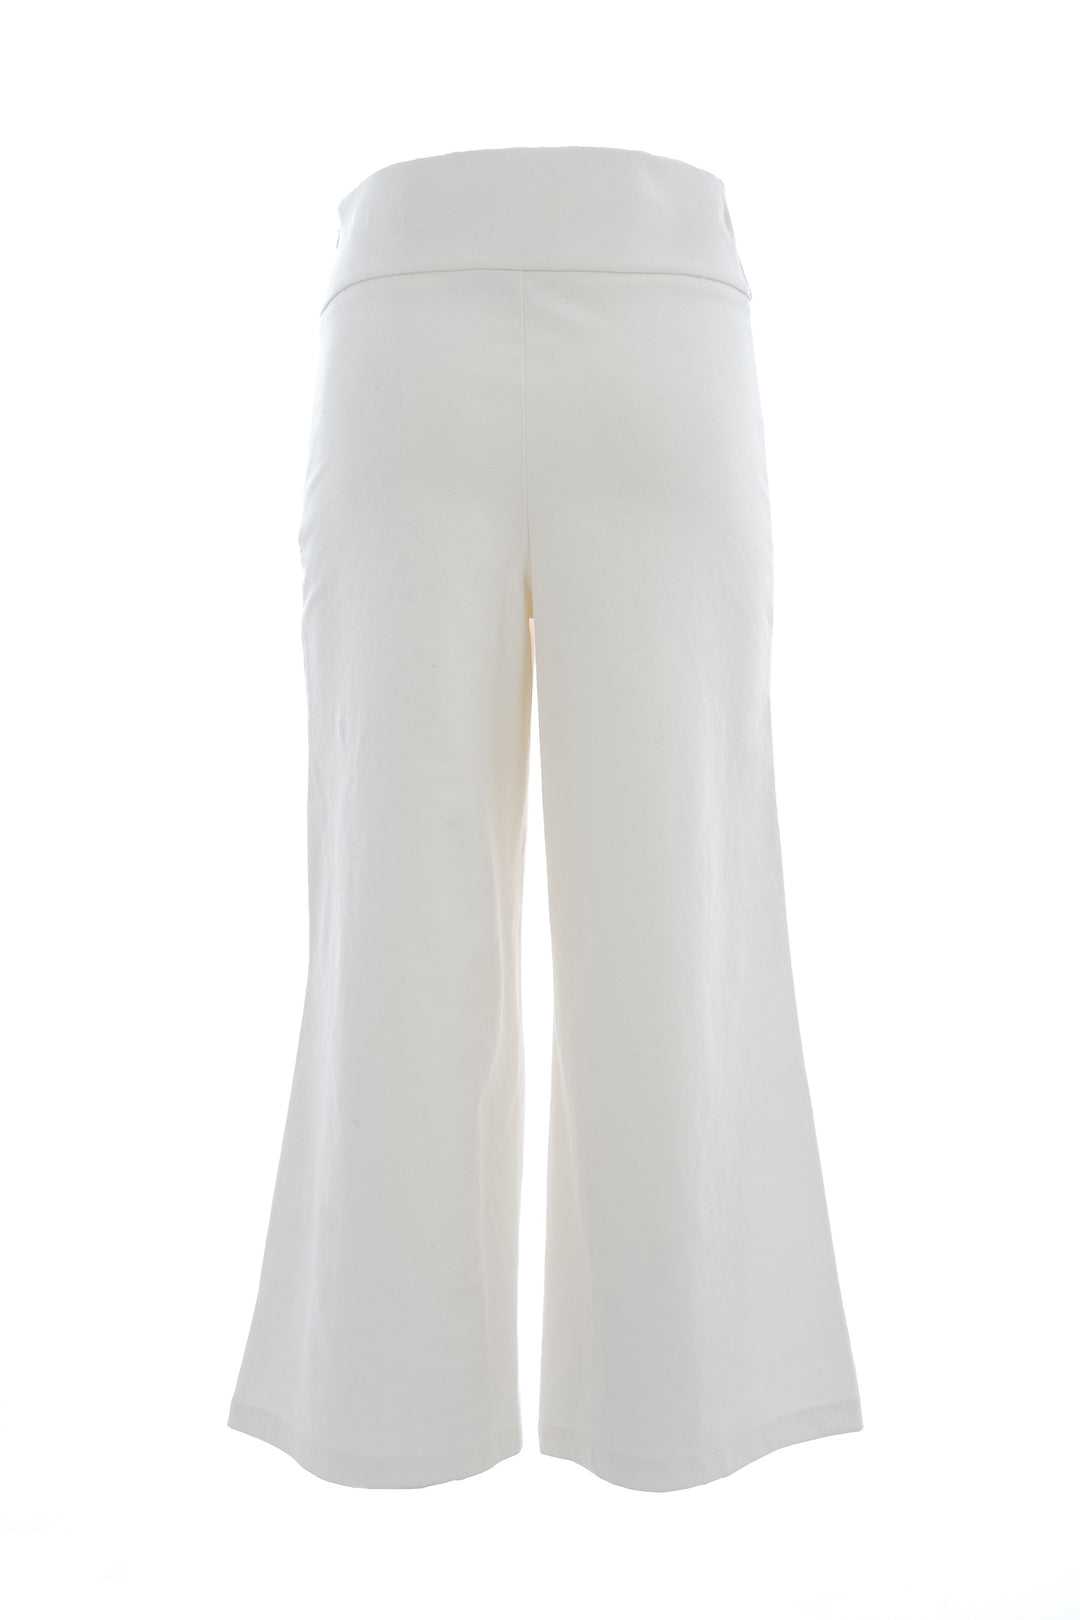 FRACOMINA Pantalone culotte wide in tessuto tecnico bianco - Mancinelli 1954